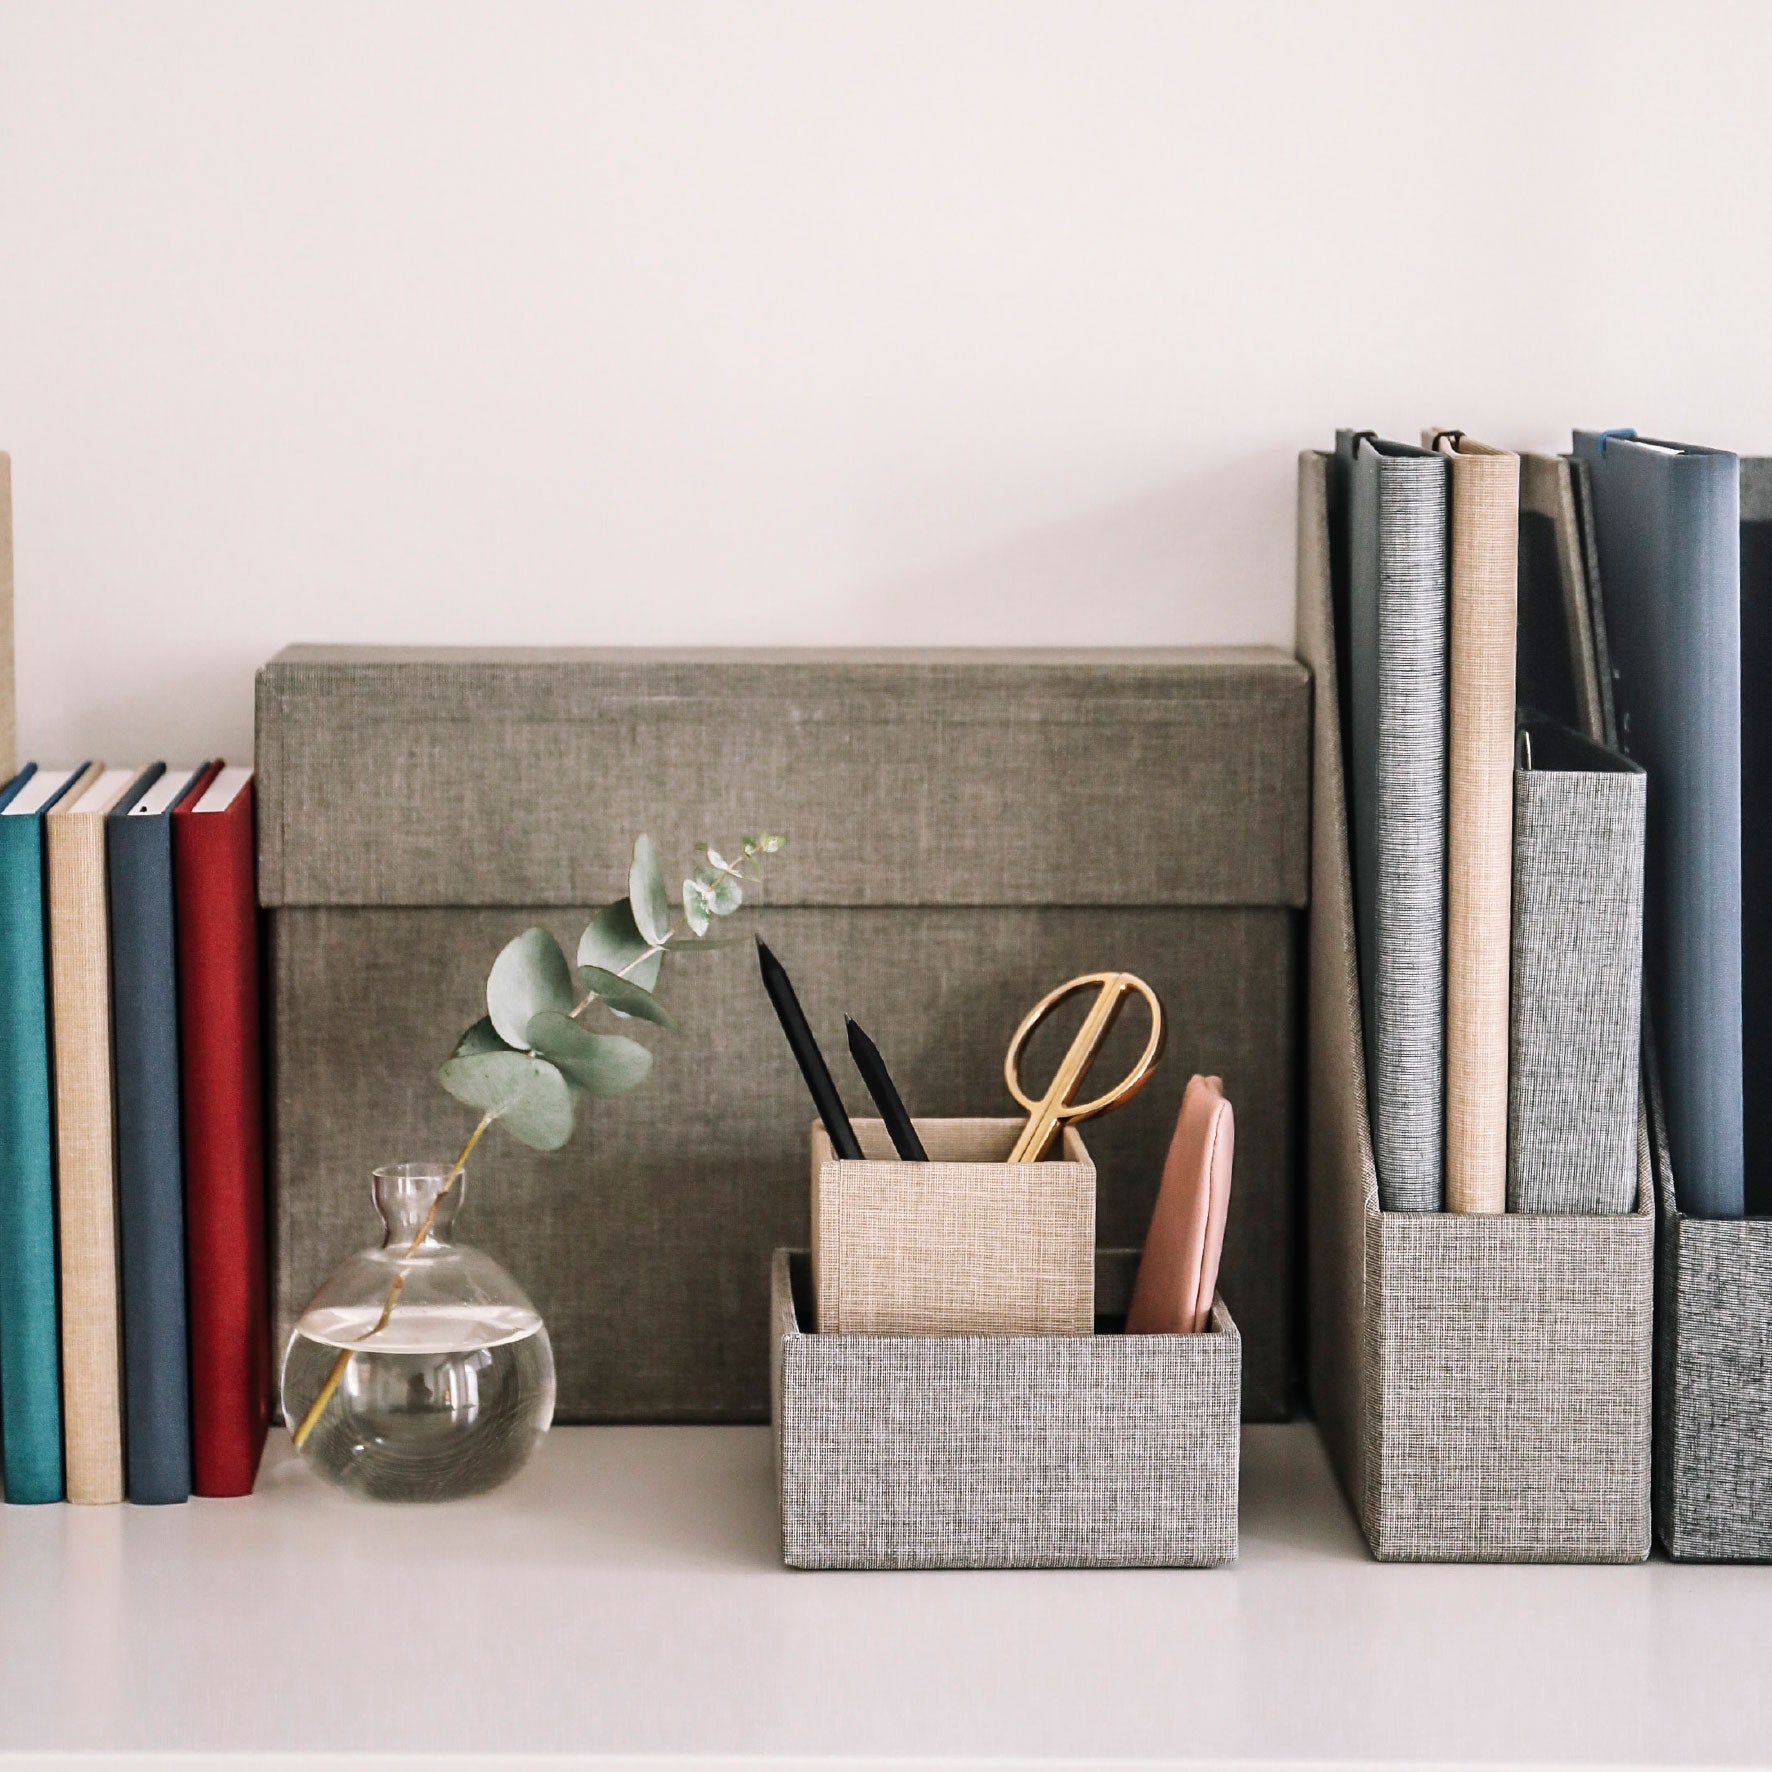 Bookbinders Design - Filing Box - A4 - Dusty Green